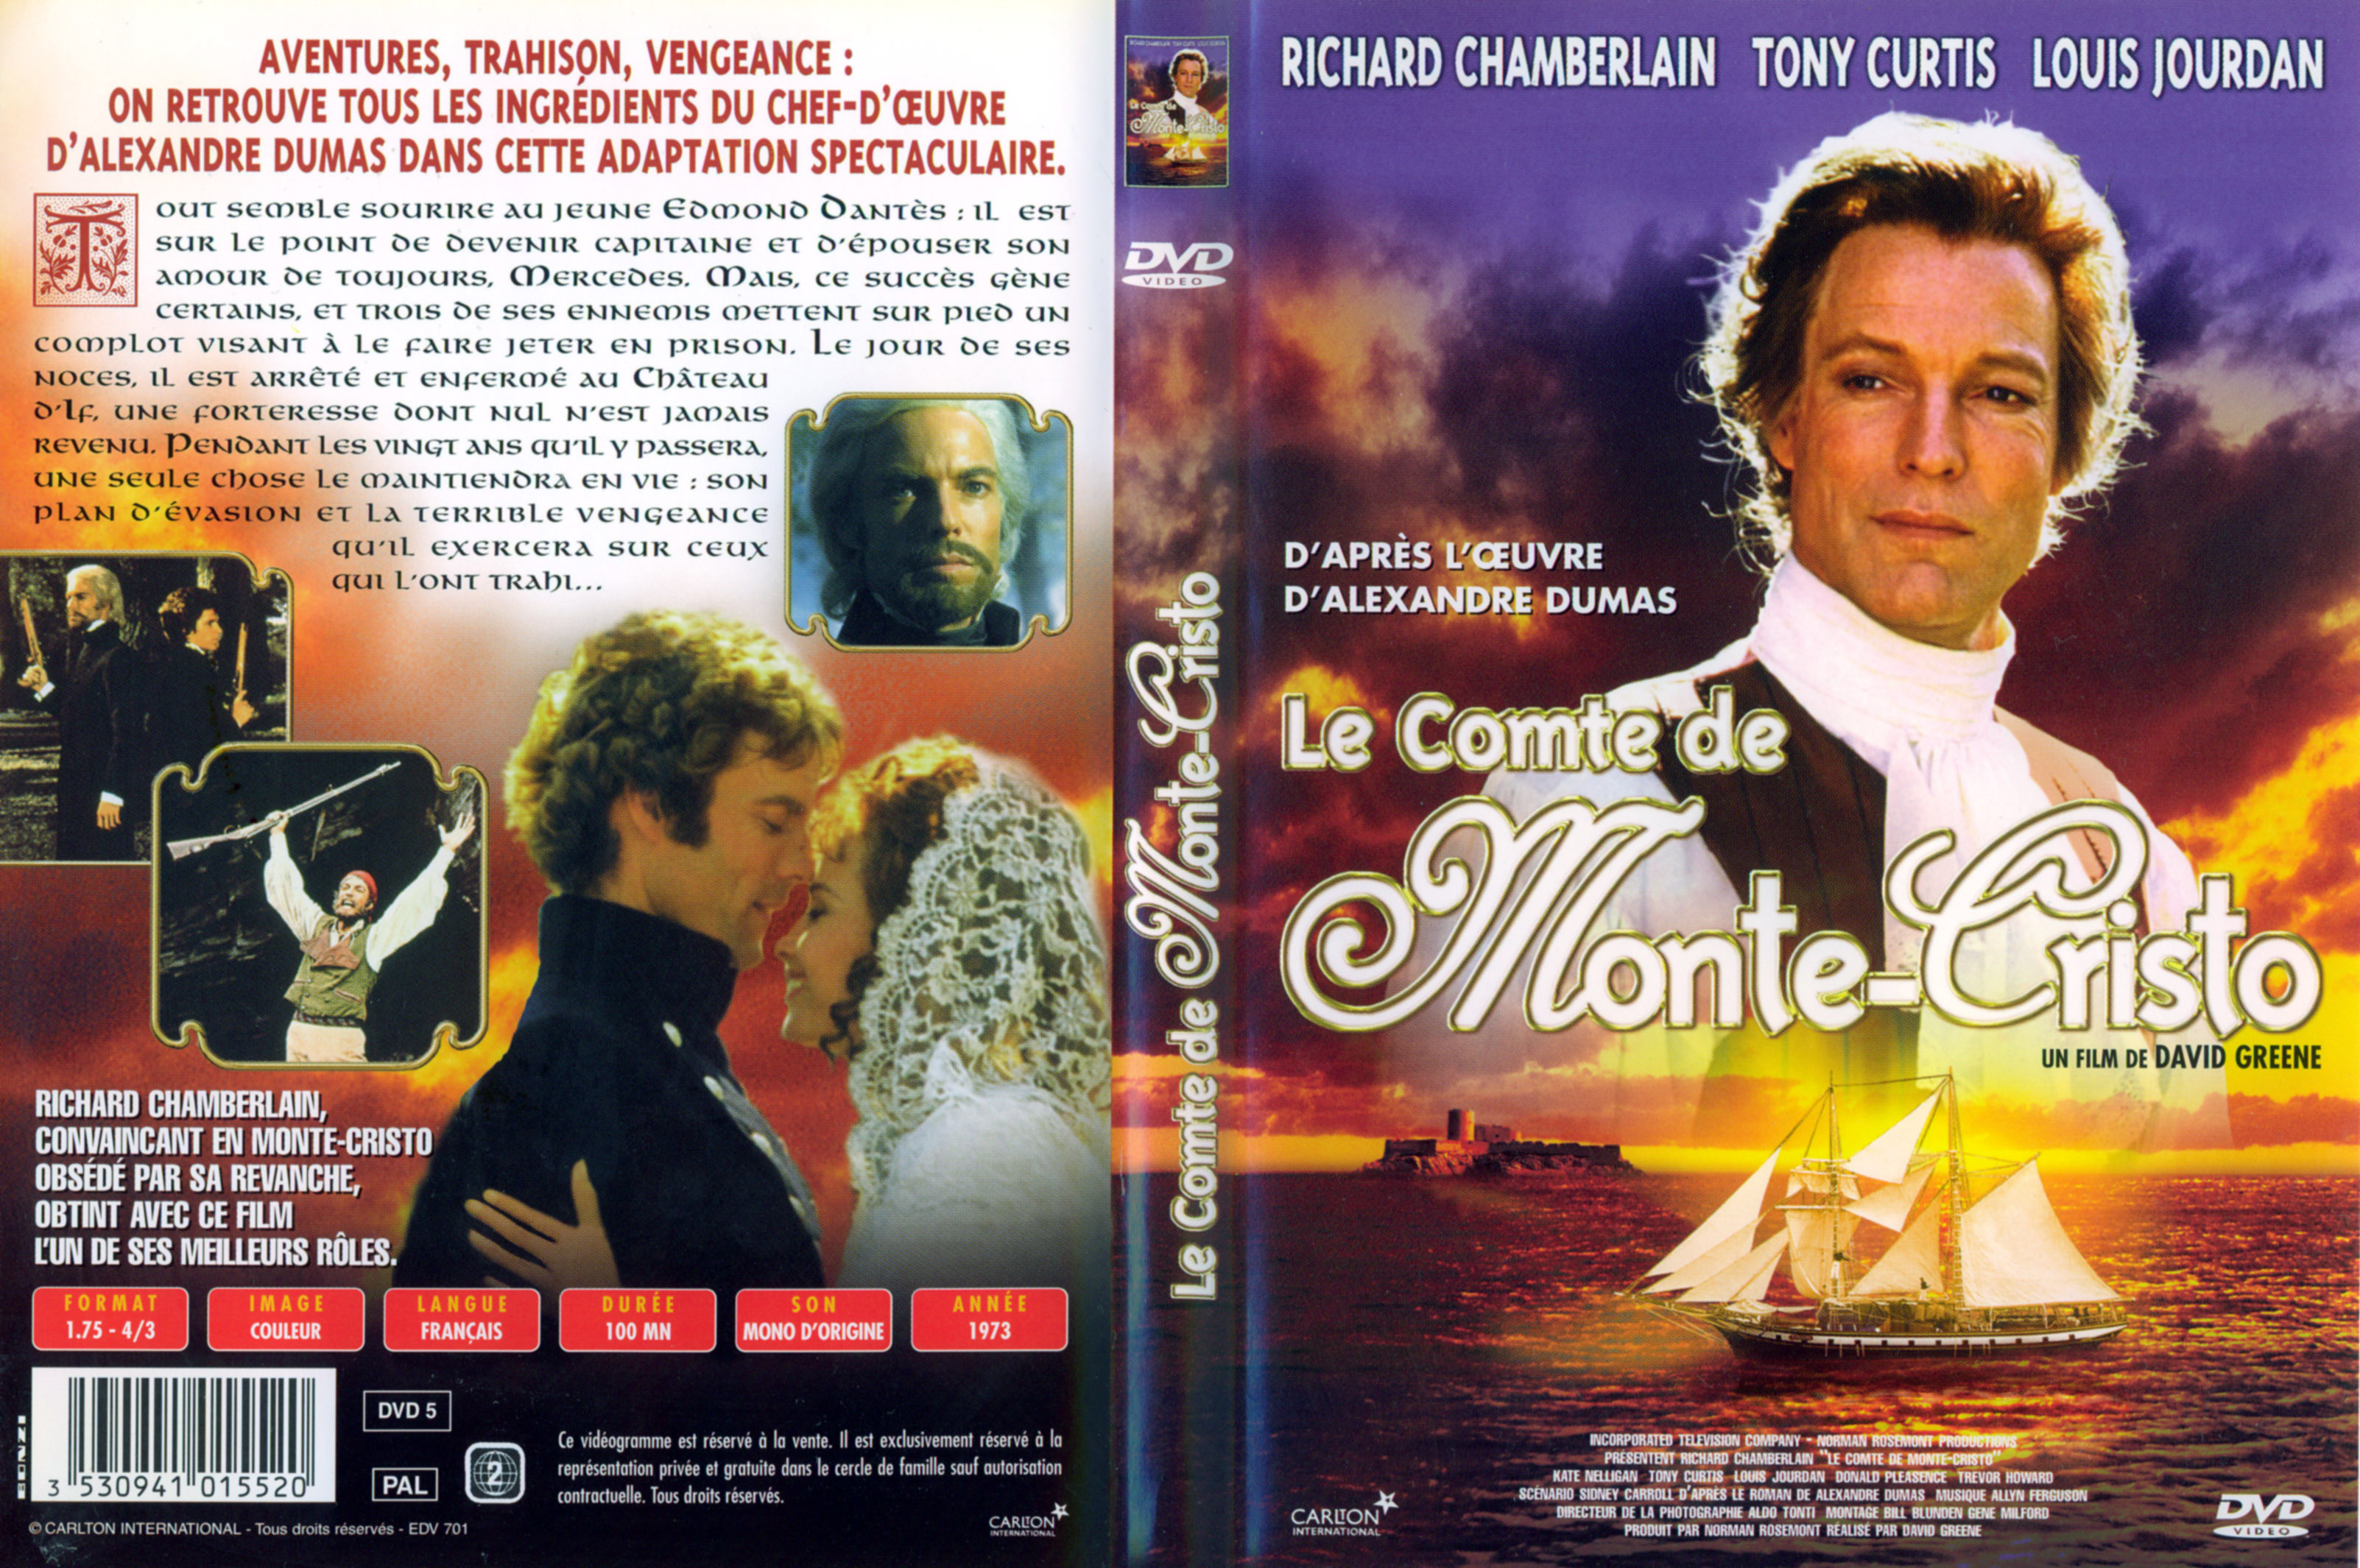 Jaquette DVD Le Comte de Monte-Cristo (Richard Chamberlain)